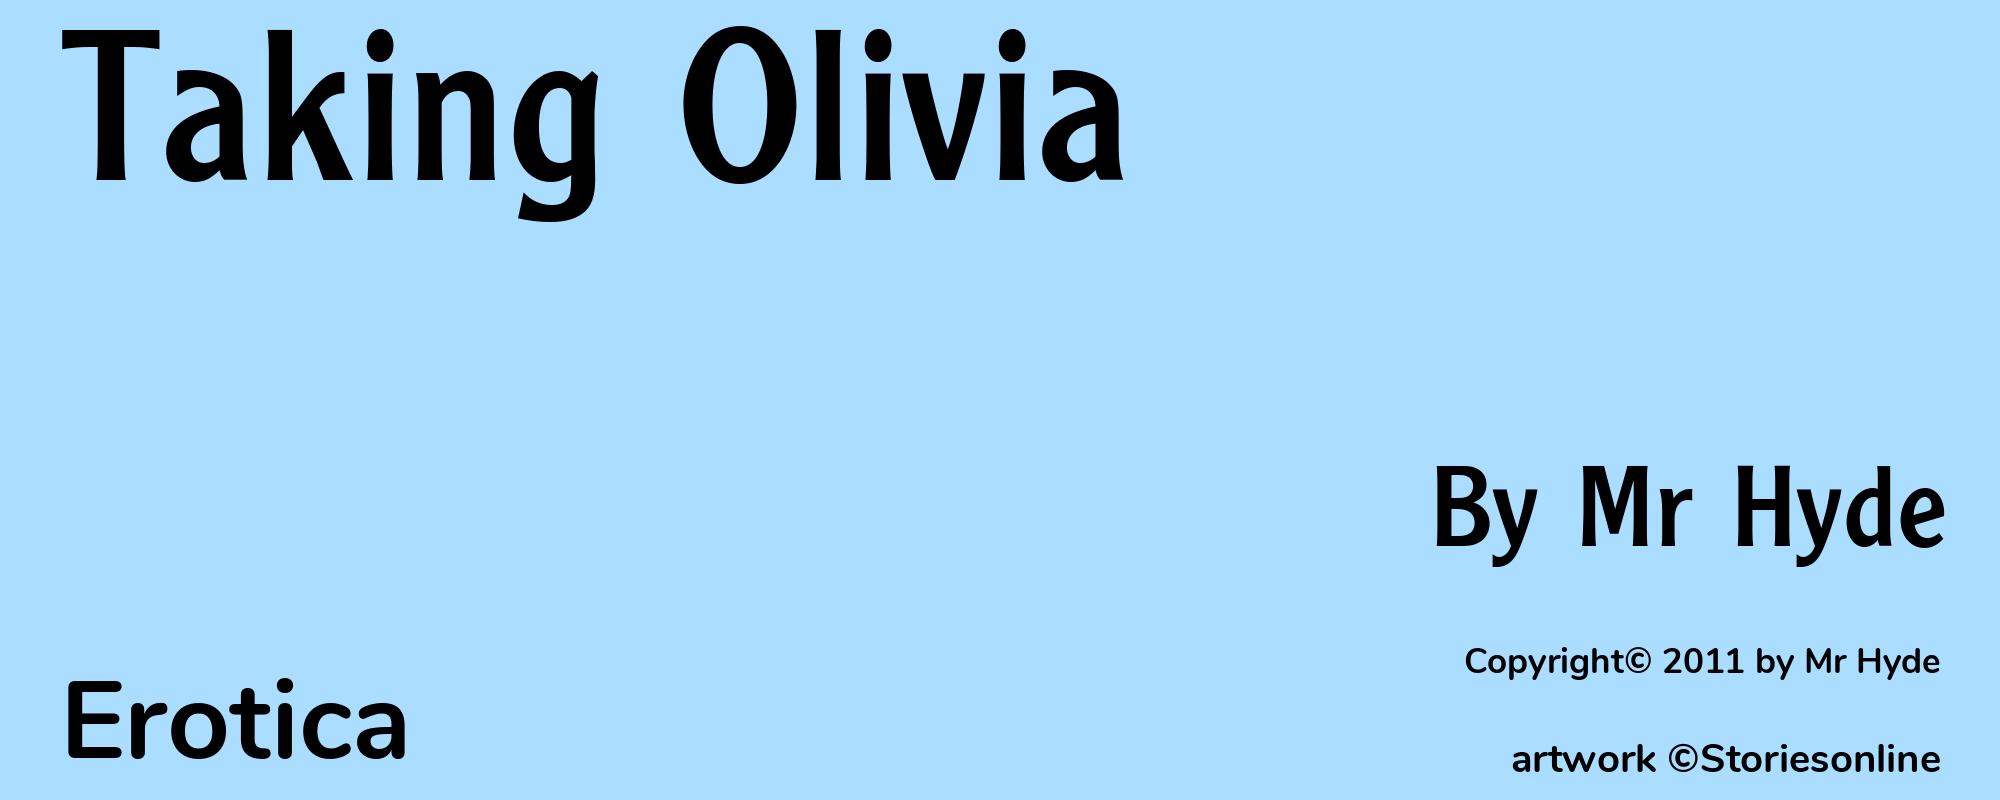 Taking Olivia - Cover